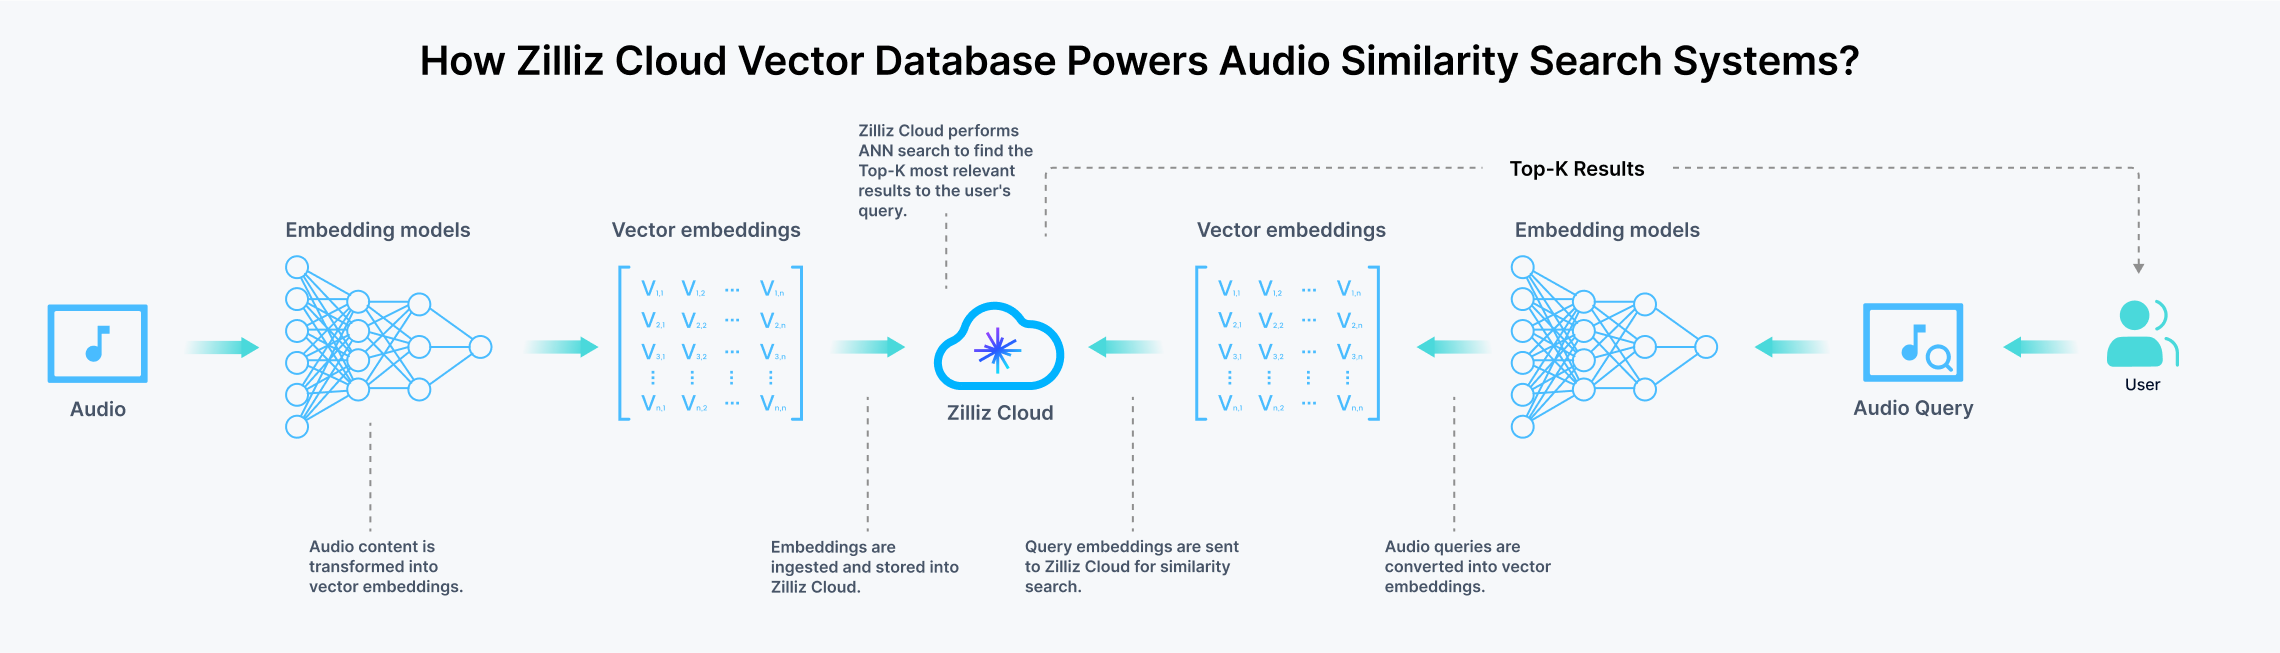 How Zilliz Cloud Powers Audio Similarity Search